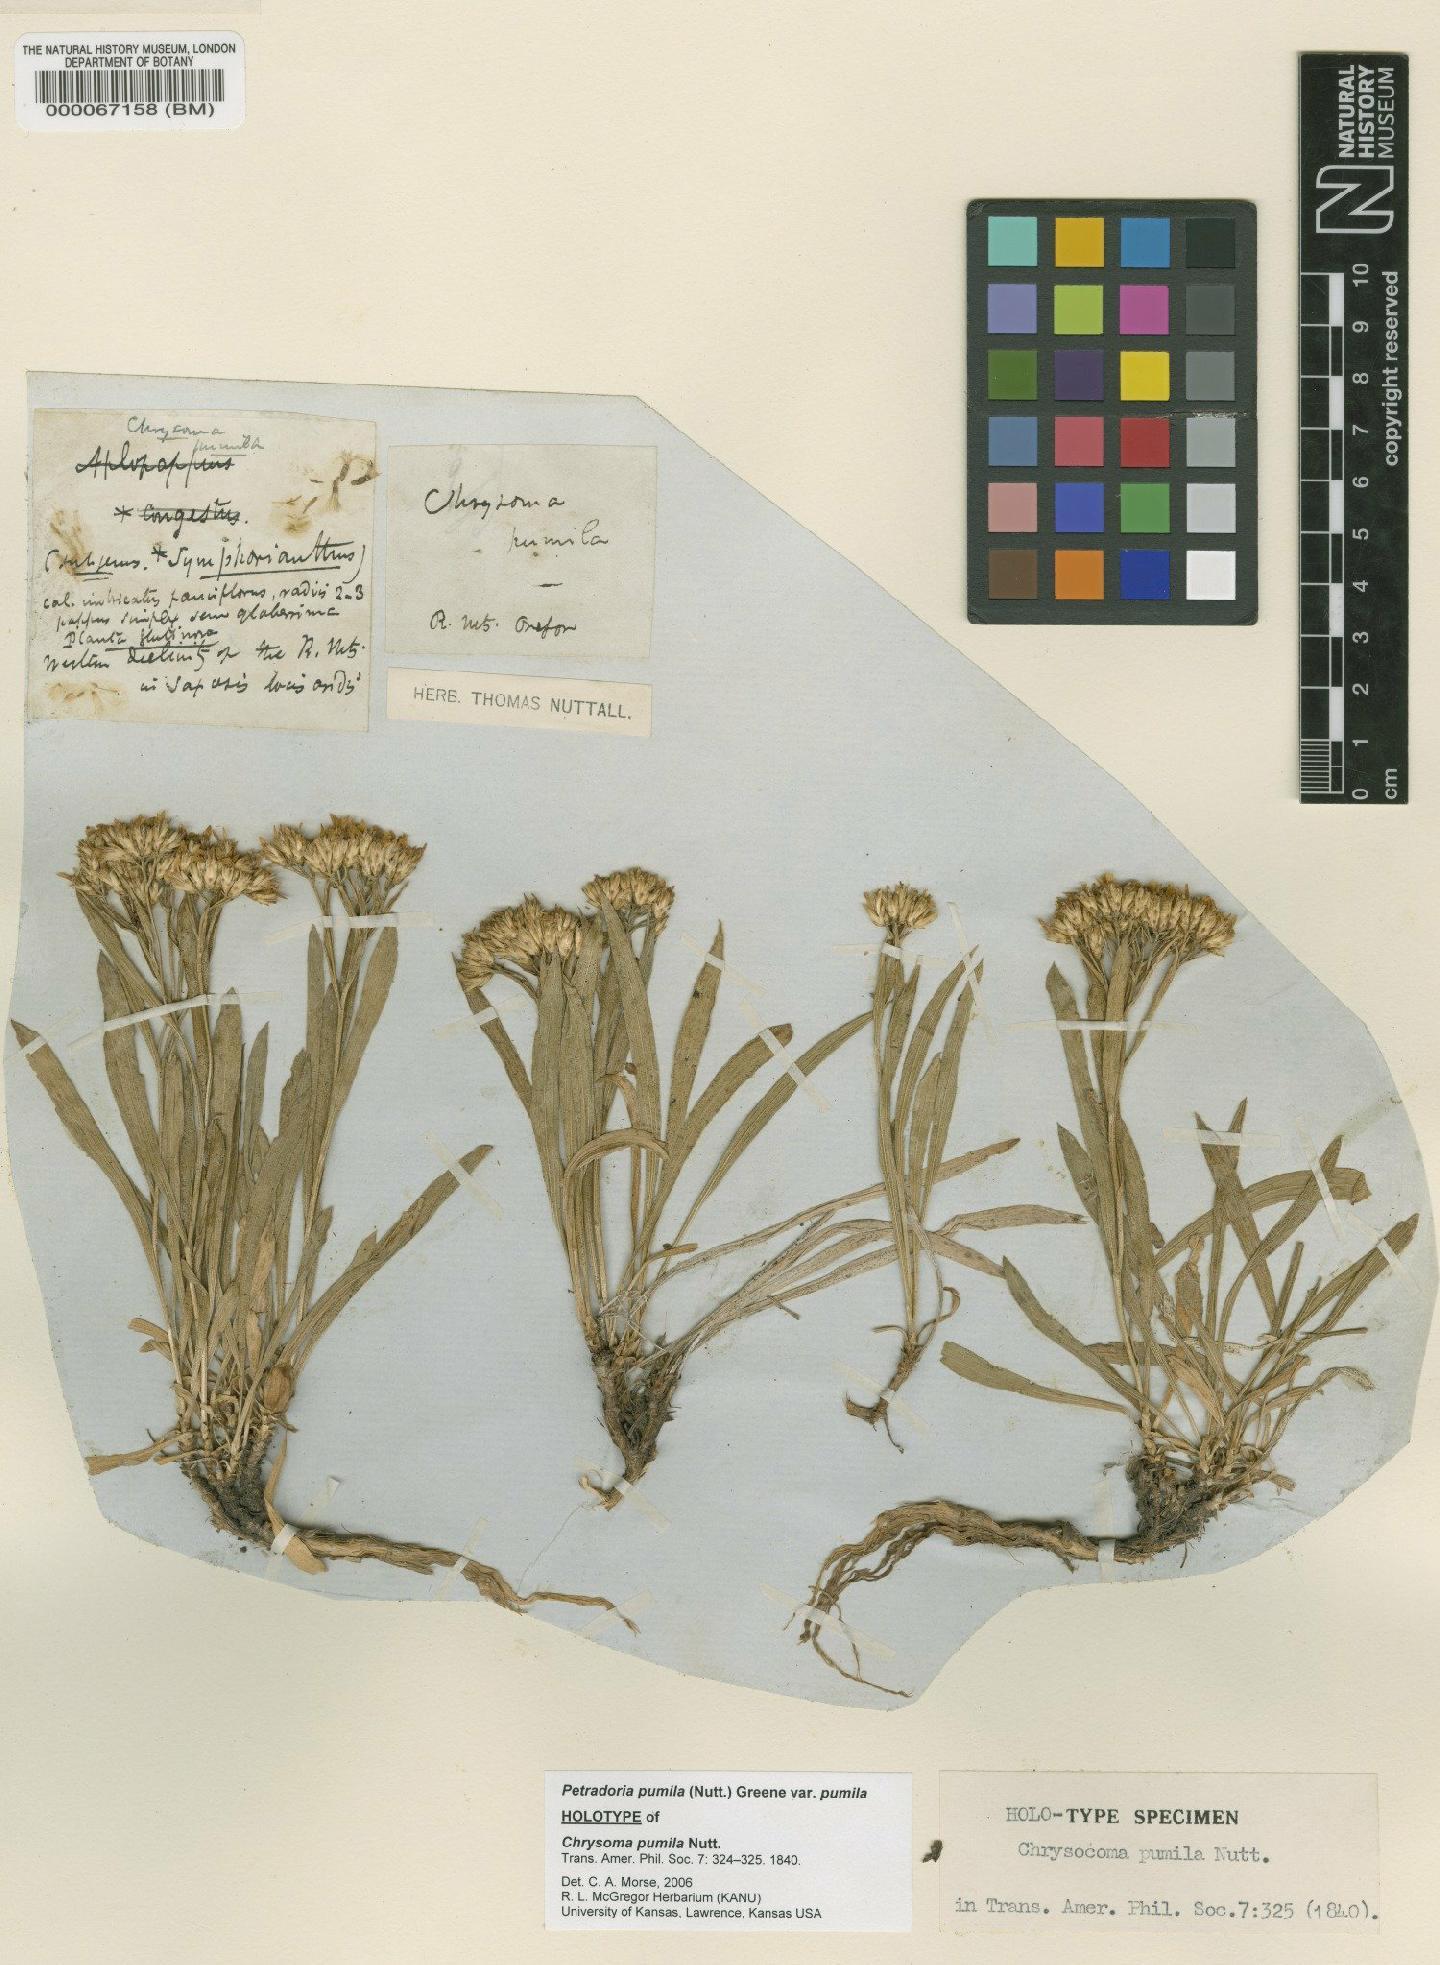 To NHMUK collection (Petradoria pumila (Nutt.) Greene; Holotype; NHMUK:ecatalogue:747079)